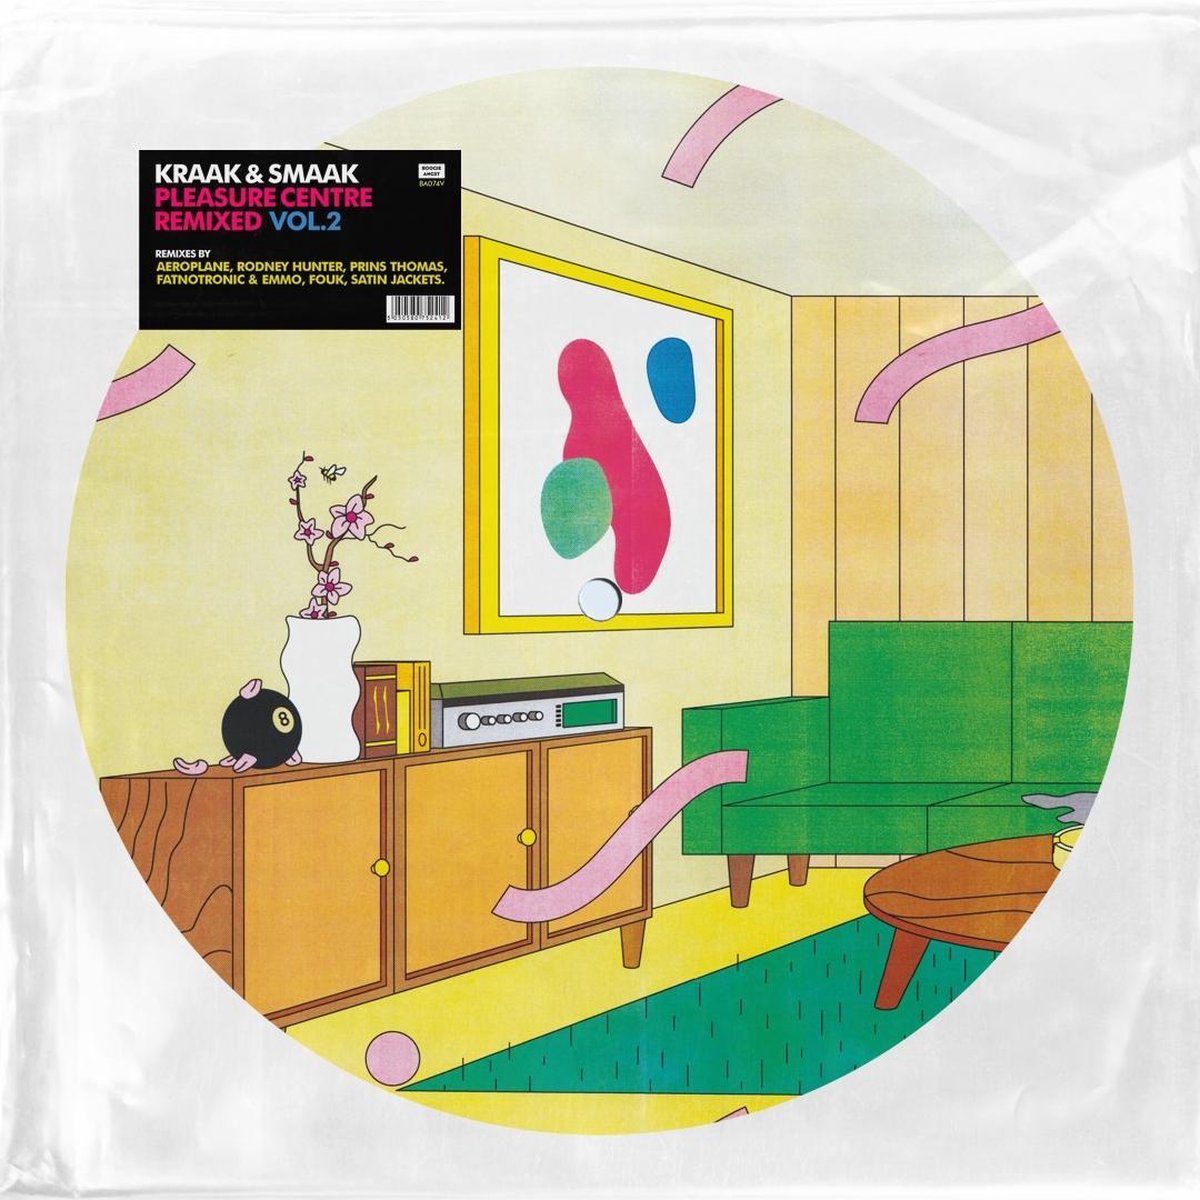 Kraak & Smaak - Pleasure Centre Remixed |  Vinyl LP | Kraak & Smaak - Pleasure Centre Remixed Vol.2  (LP) | Records on Vinyl